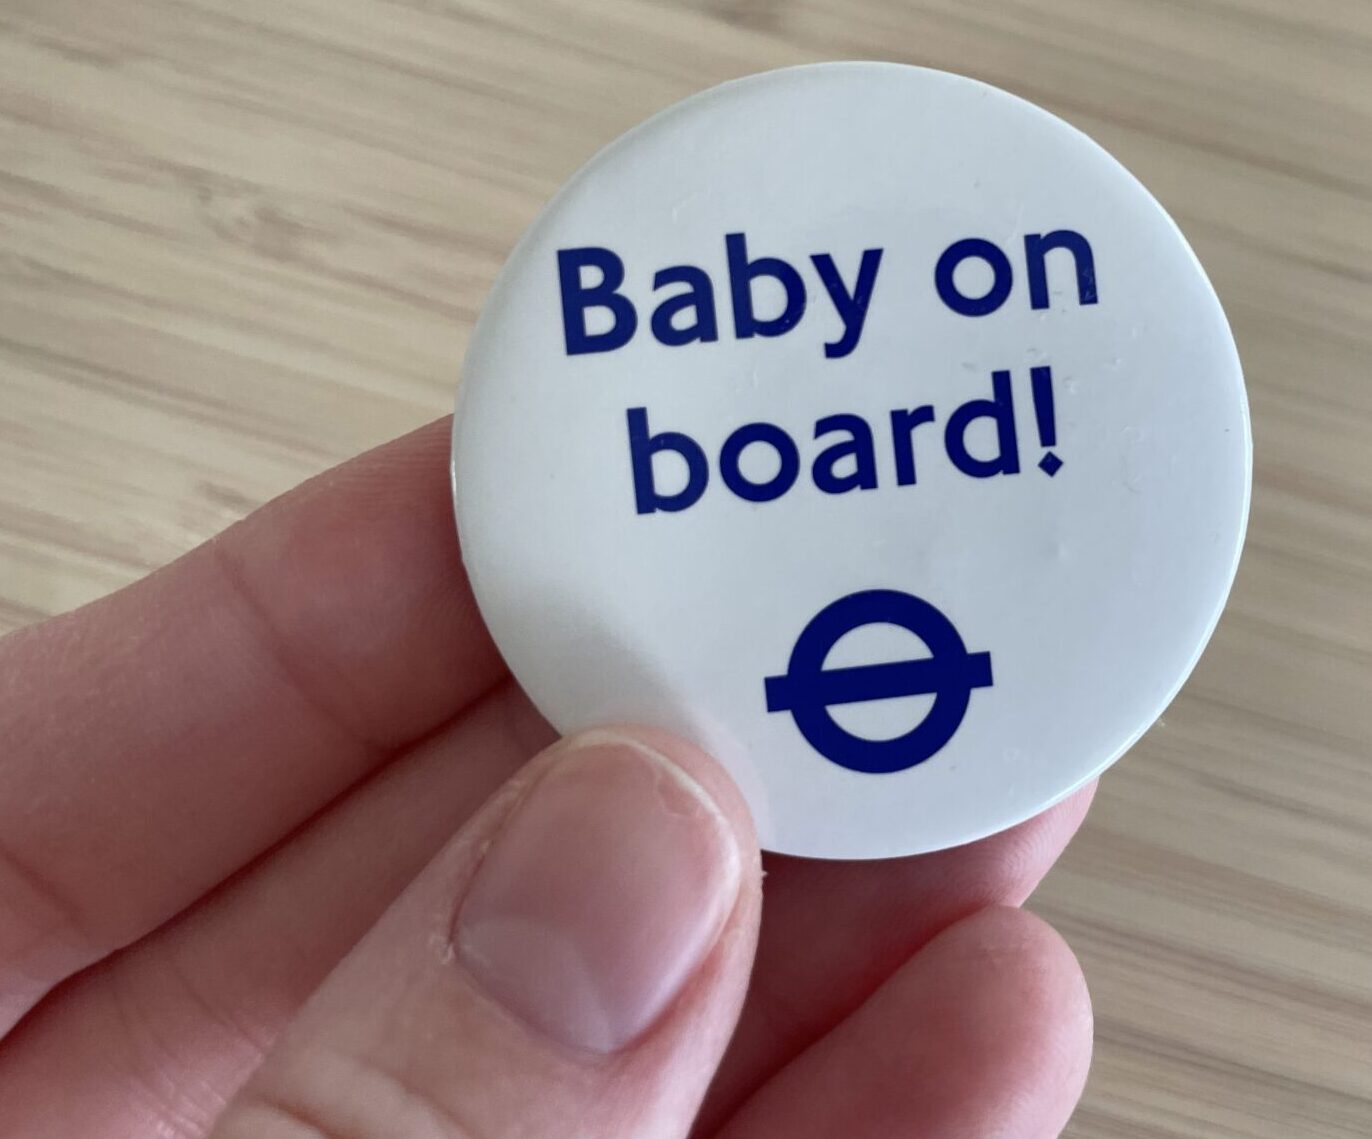 Baby on board London subway